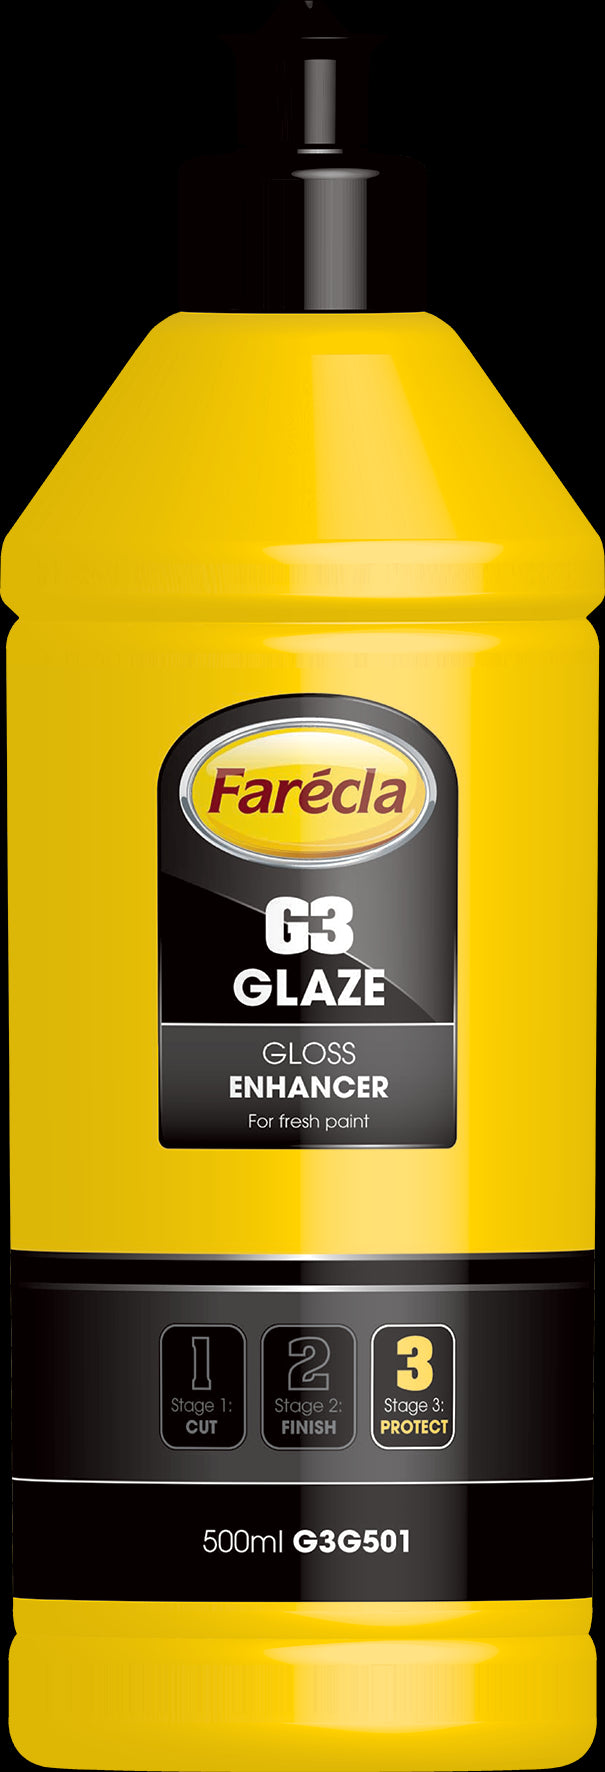 G3G501 G3 Glaze Gloss Enhancer - 500ml